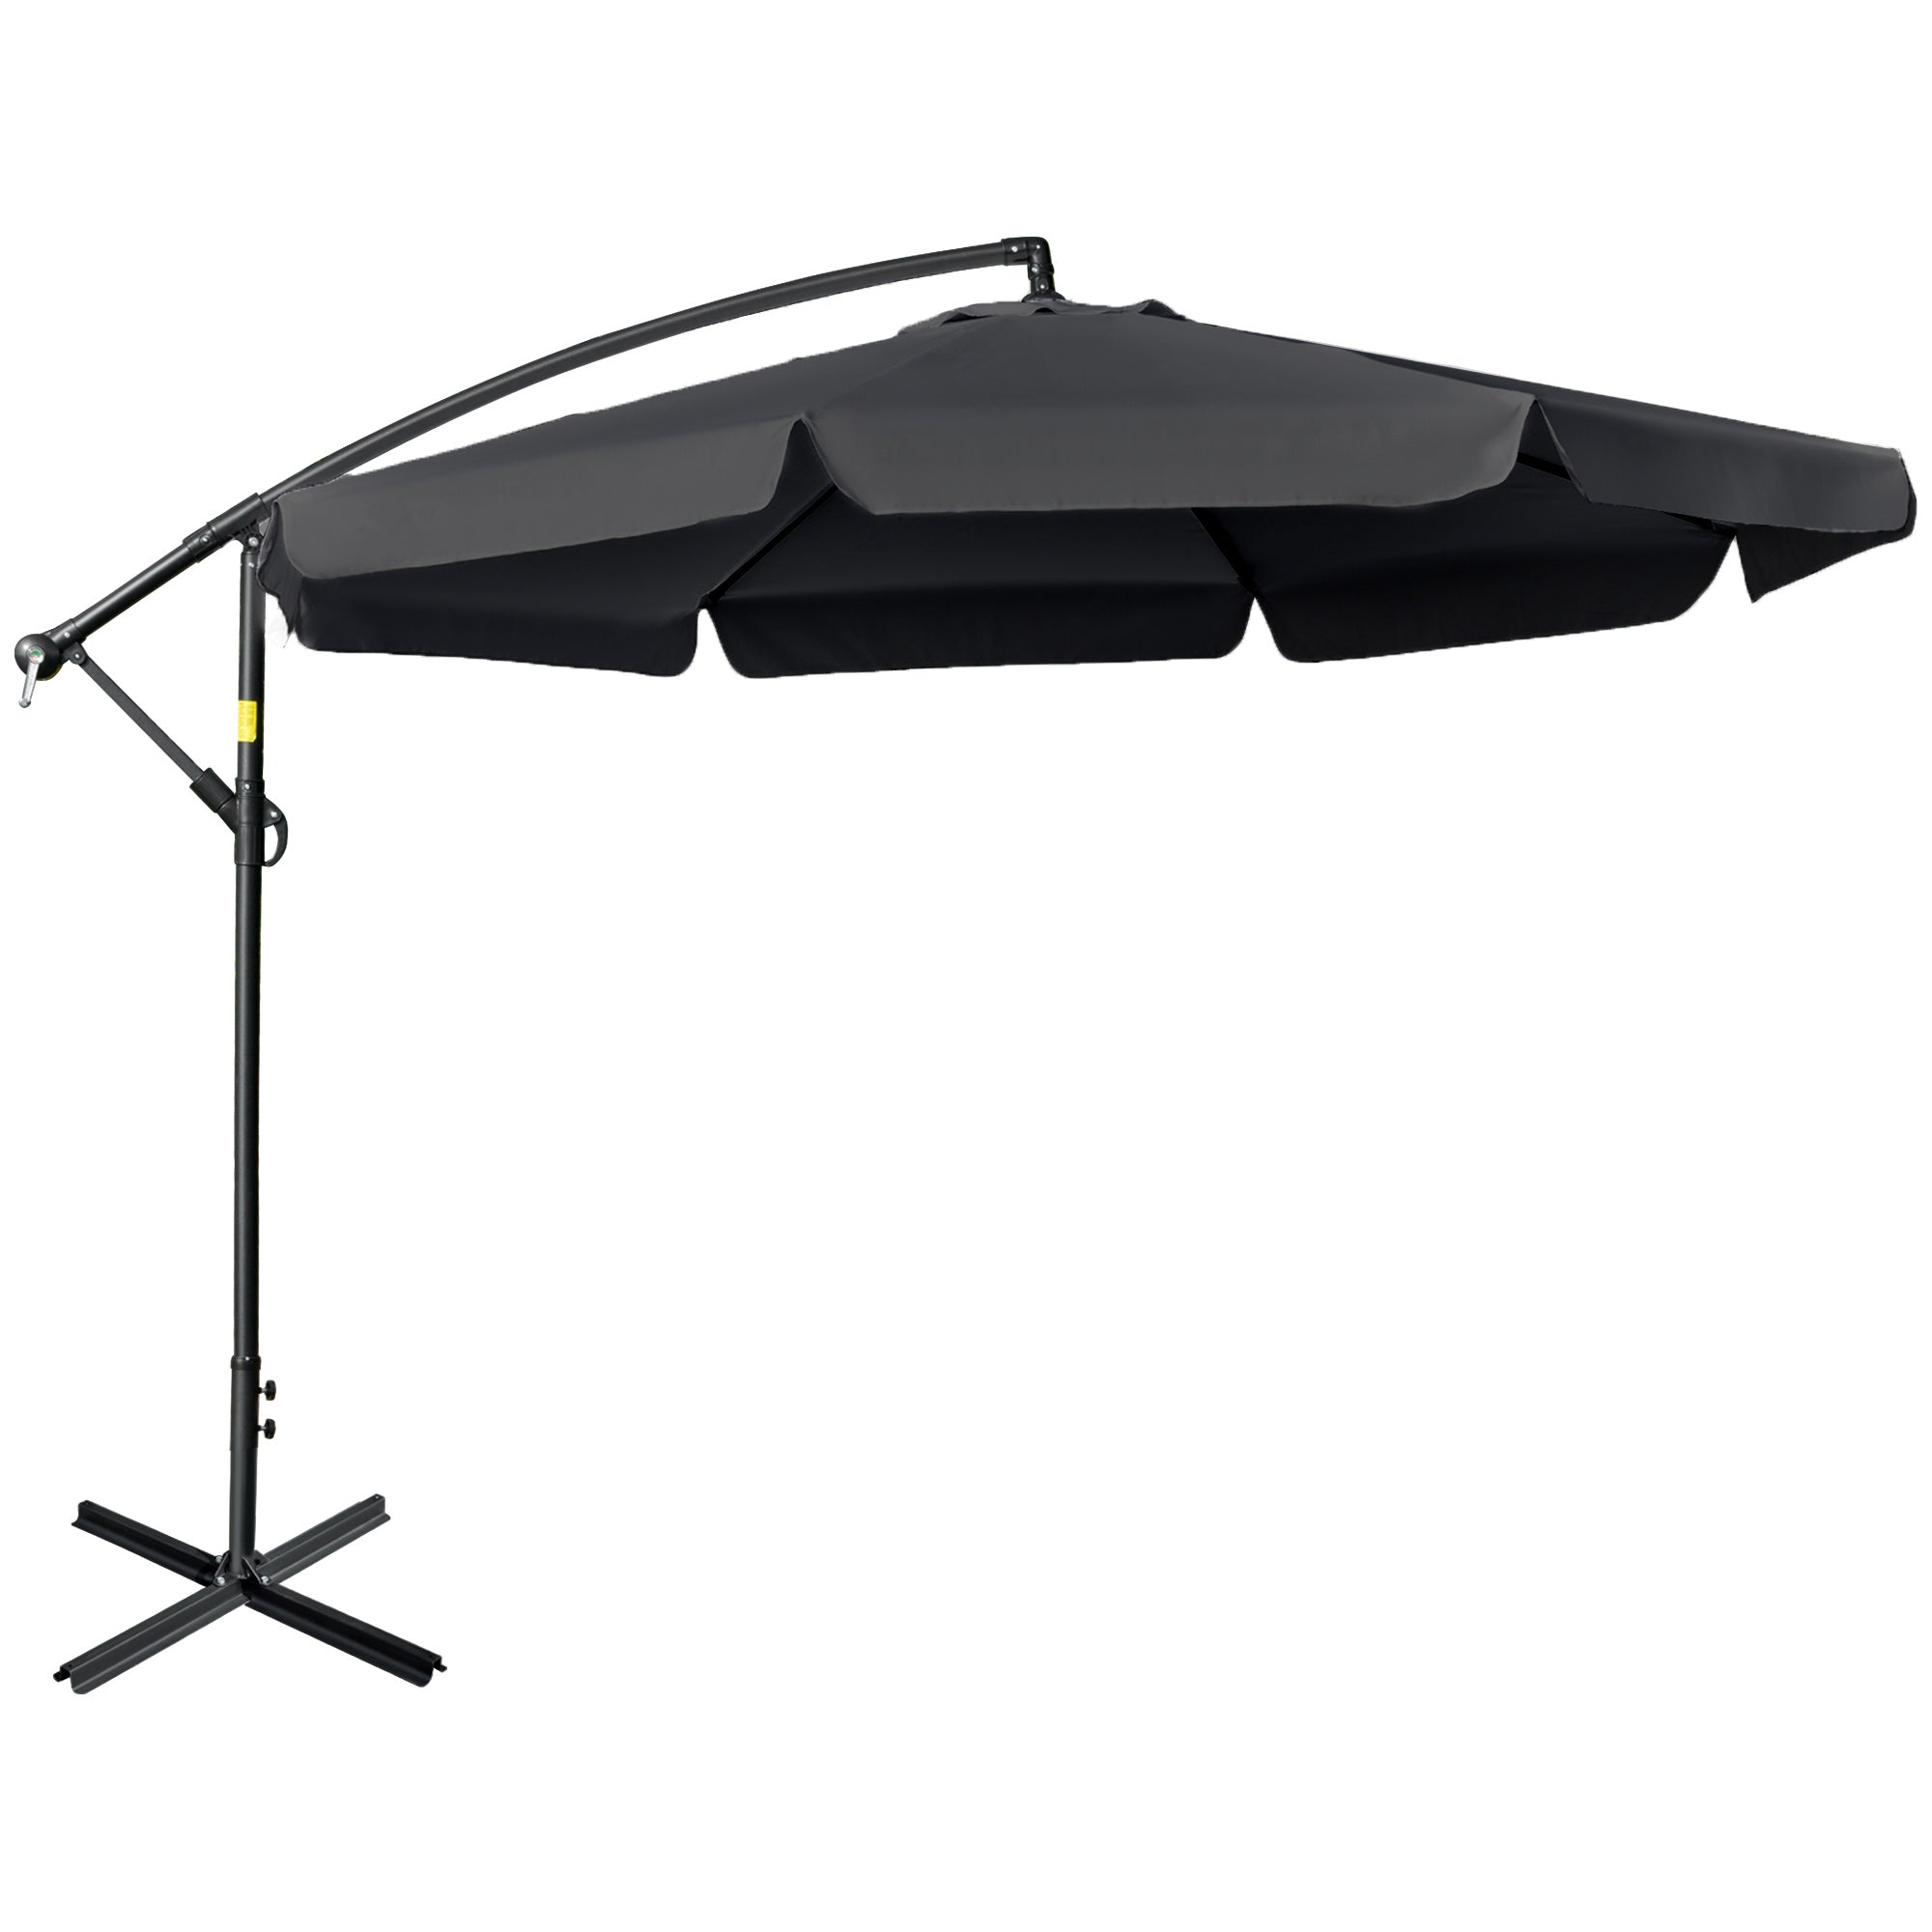 2.7m Banana Parasol Cantilever Umbrella with Crank Handle and Cross Base for Outdoor, Hanging Sun Shade, Black-0